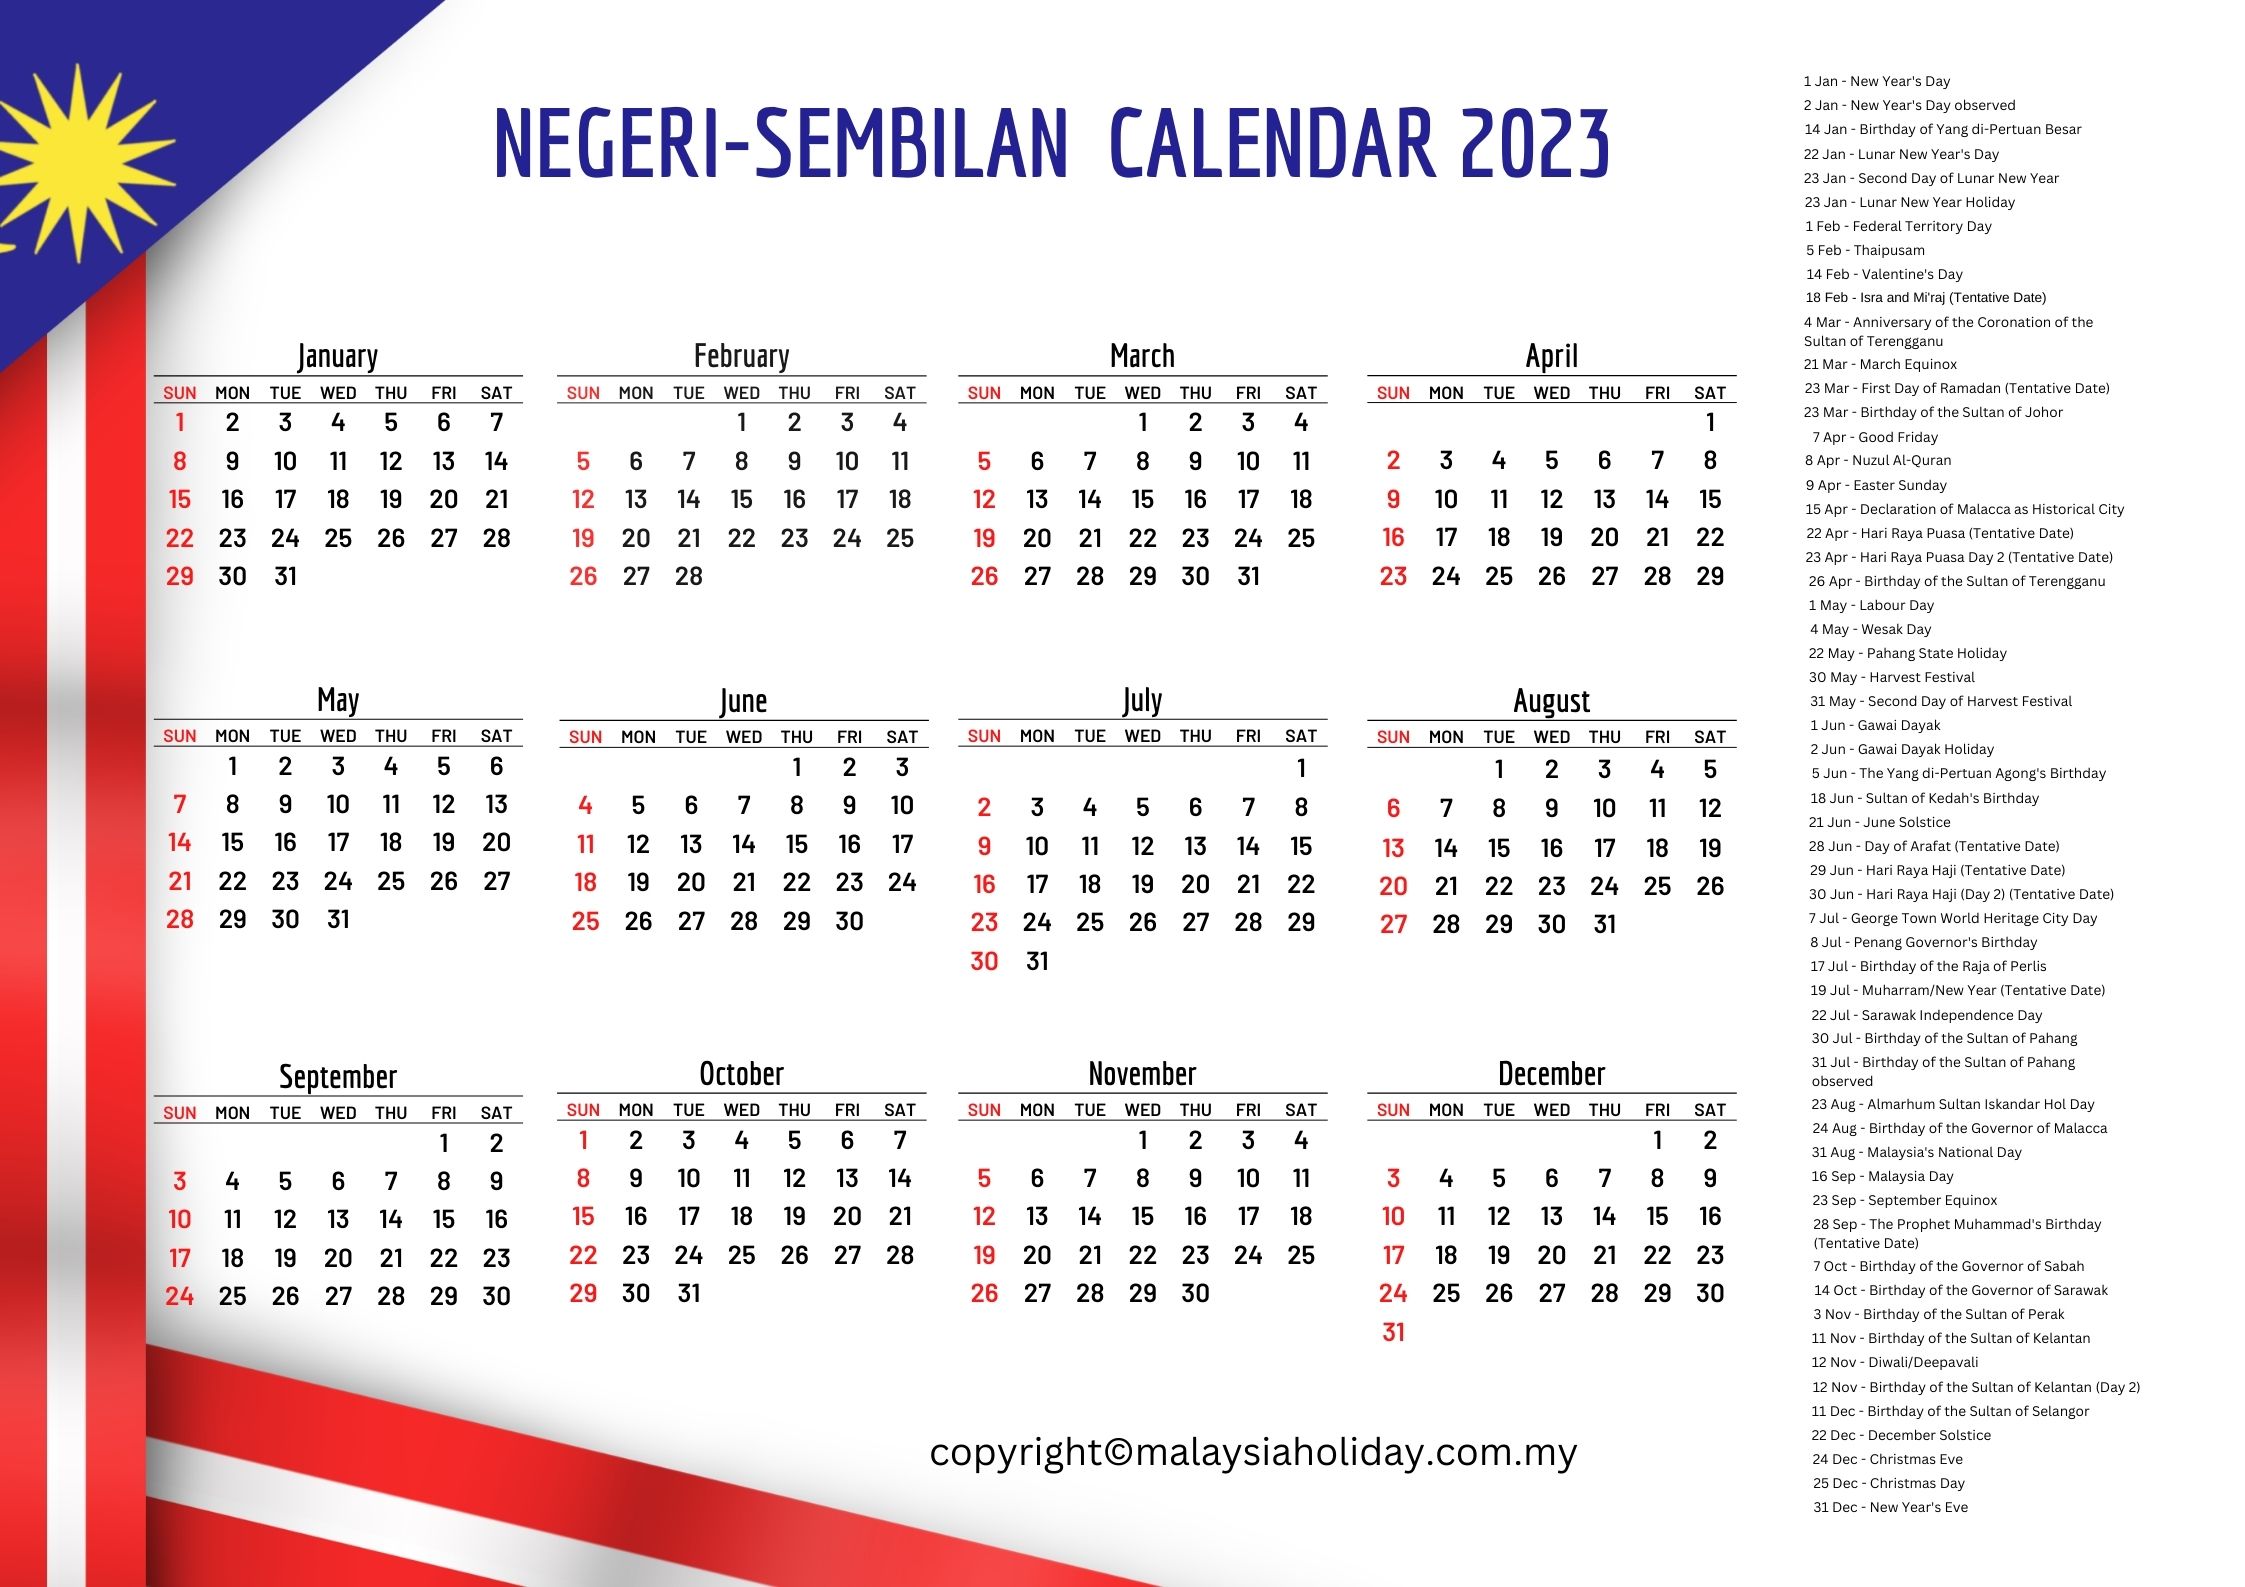 Public Holidays 2023 Negeri Sembilan